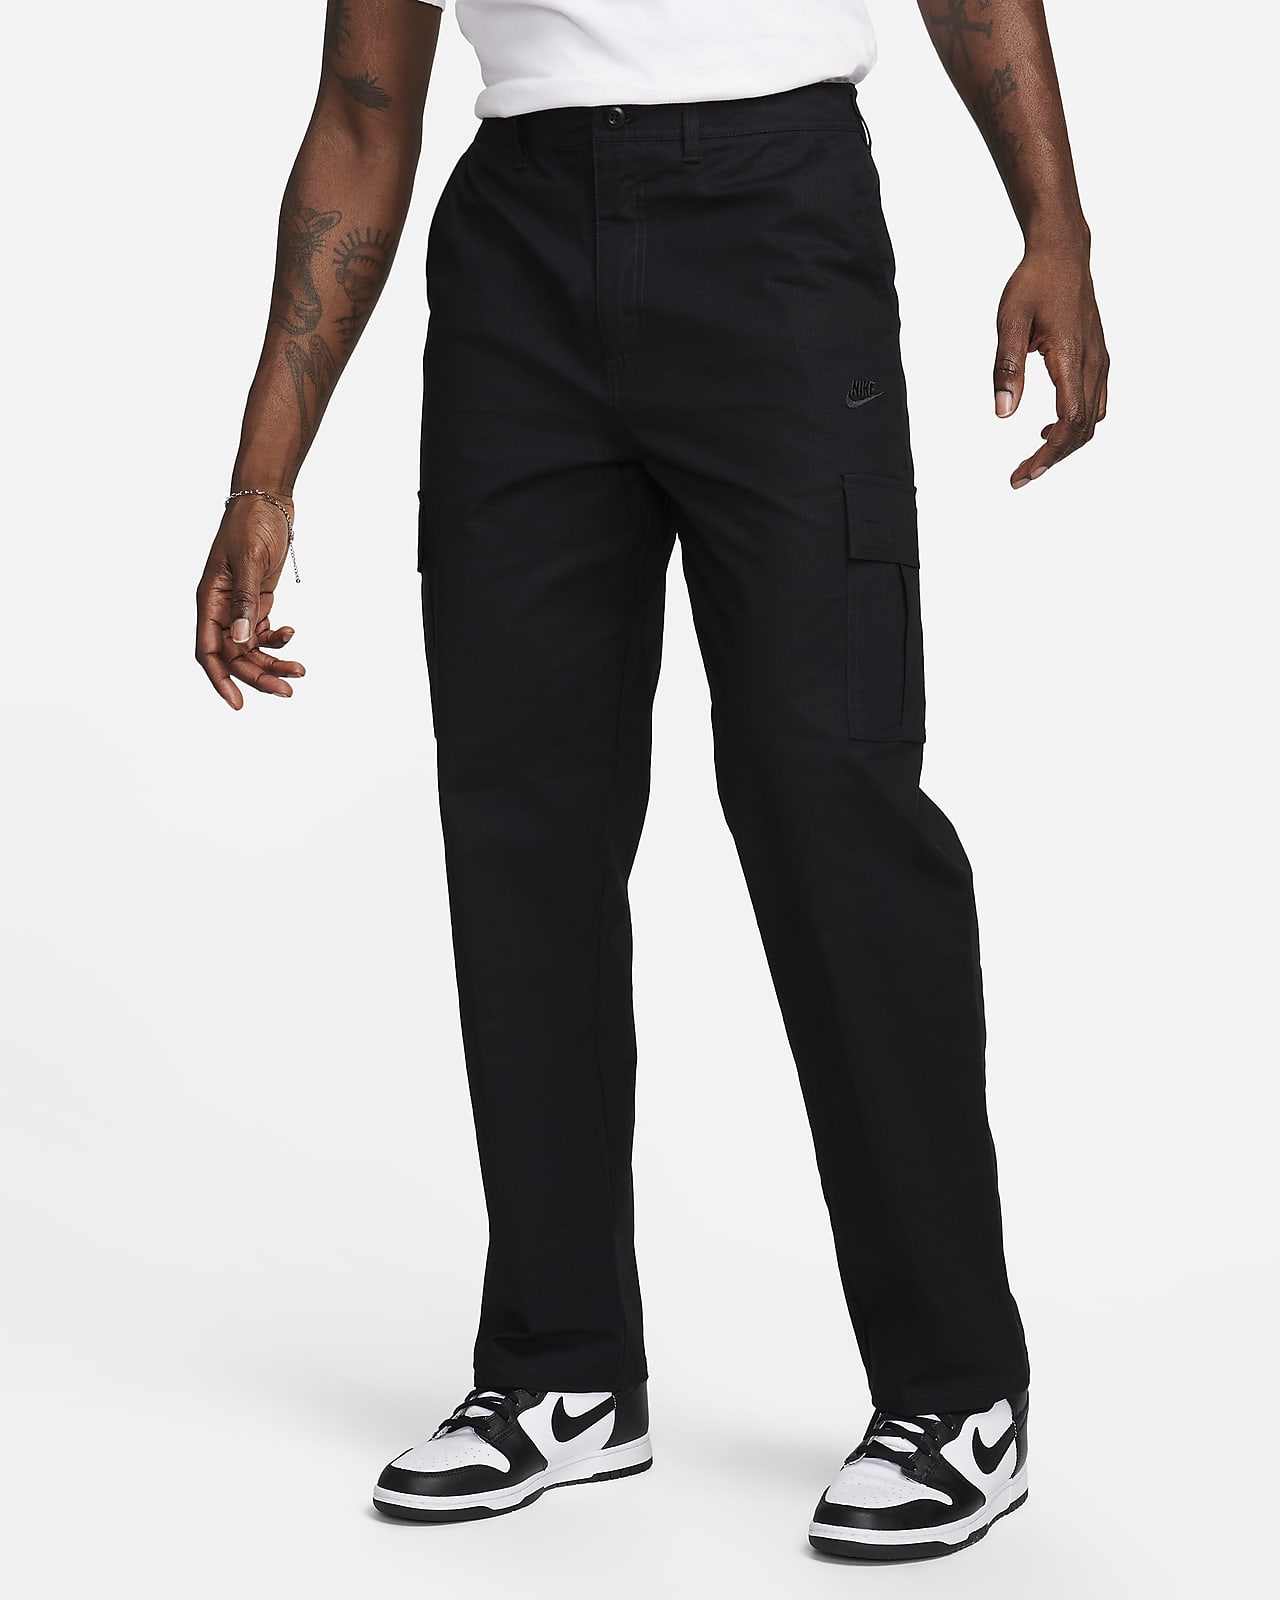 Pants cargo para hombre Nike Club